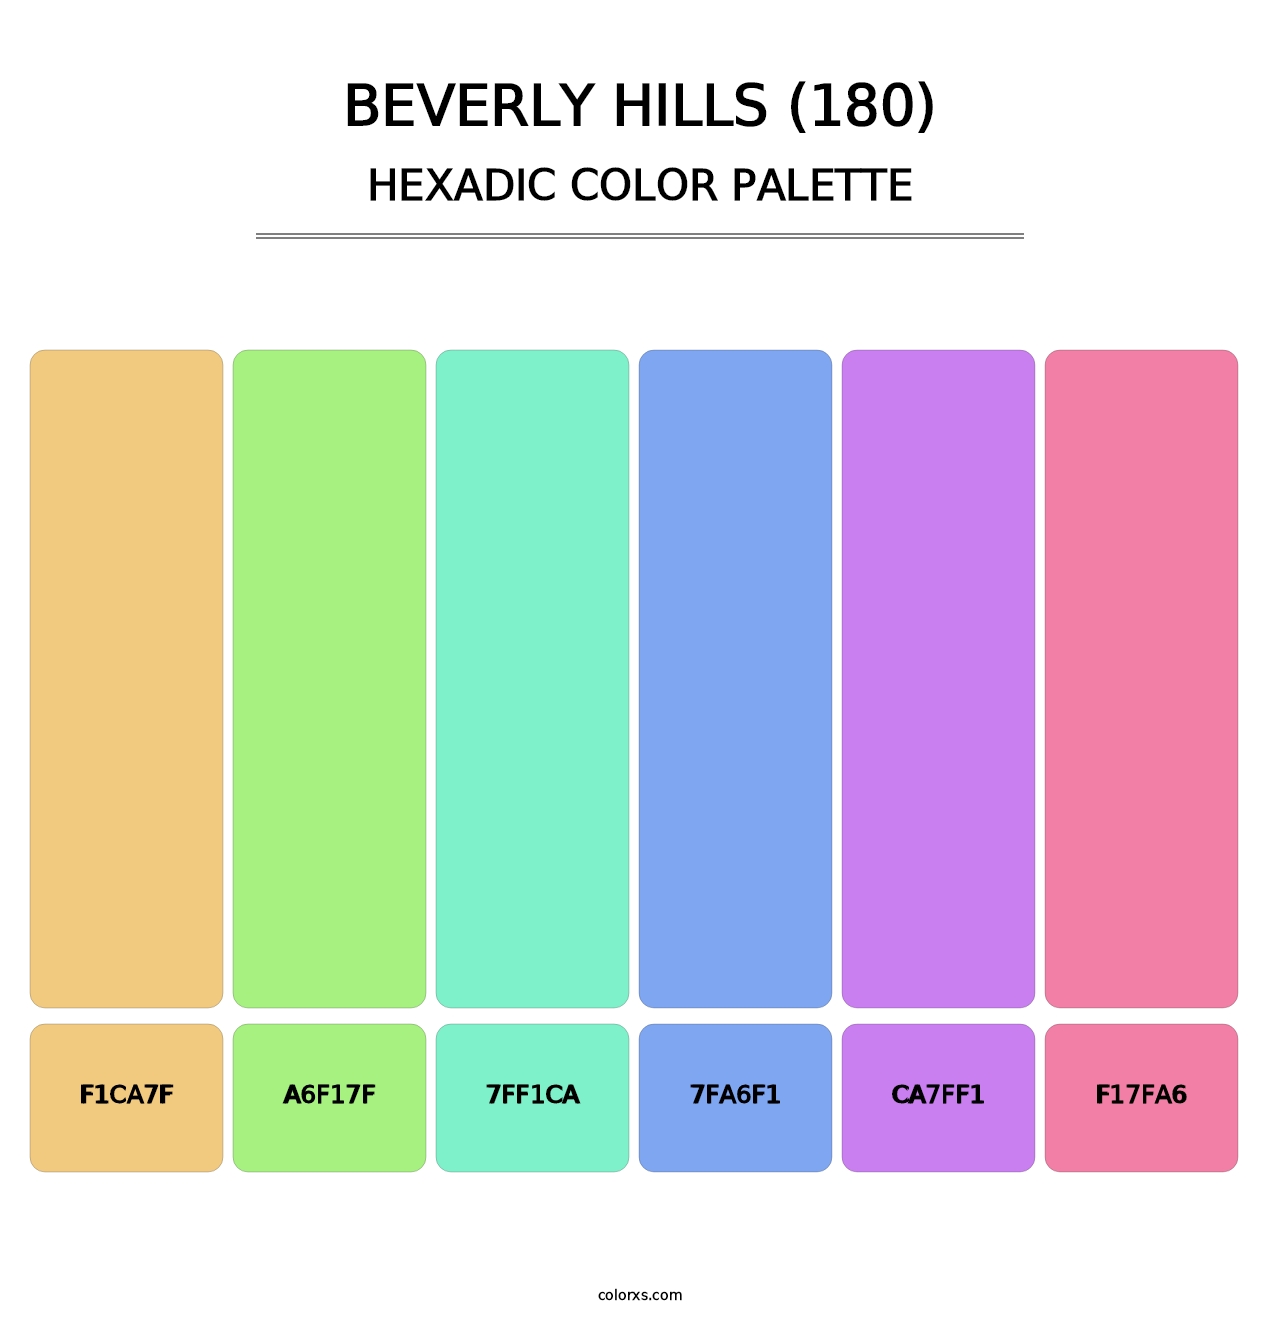 Beverly Hills (180) - Hexadic Color Palette